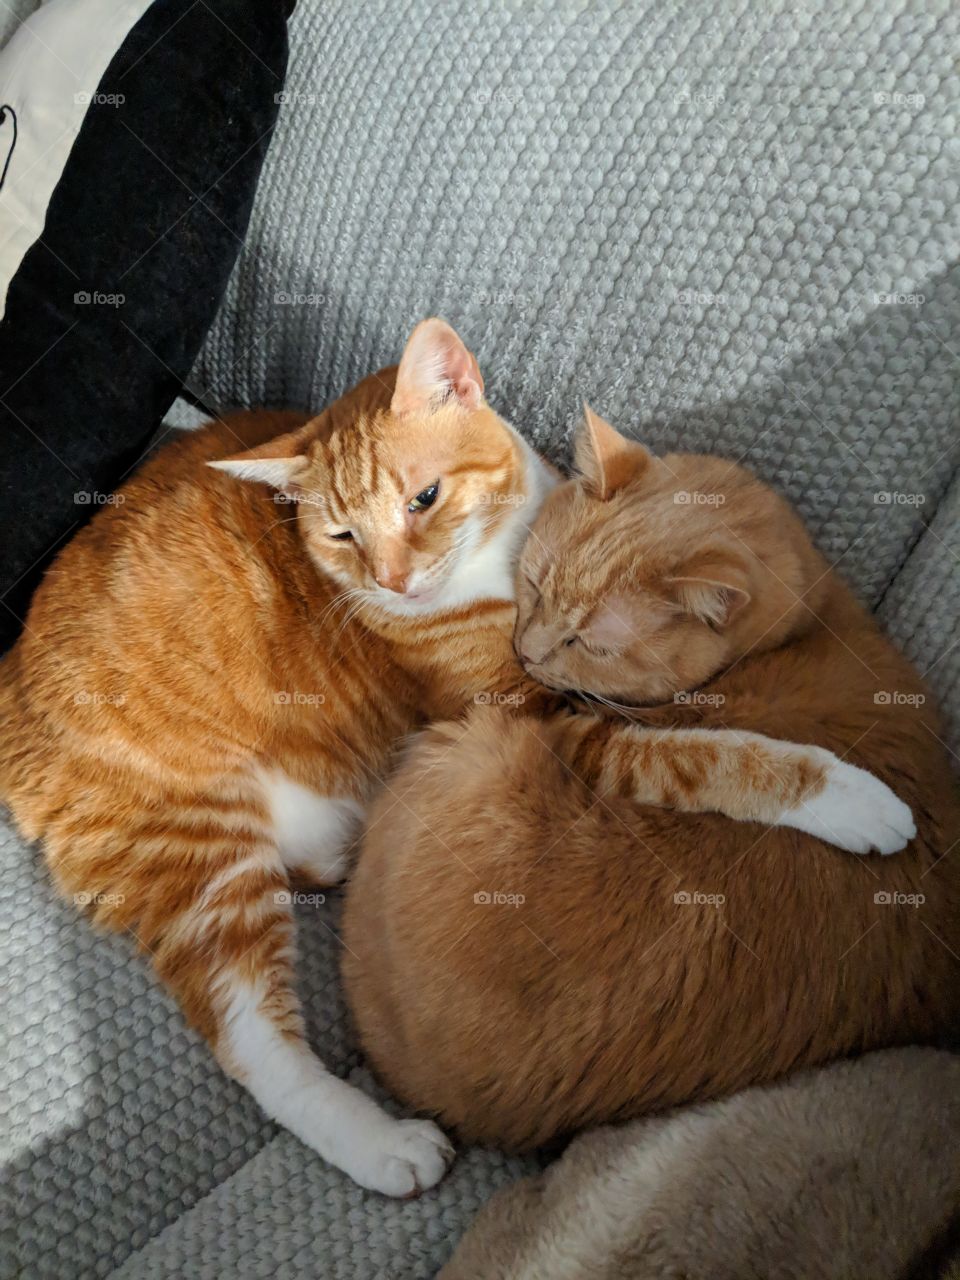 Cuddle buddies